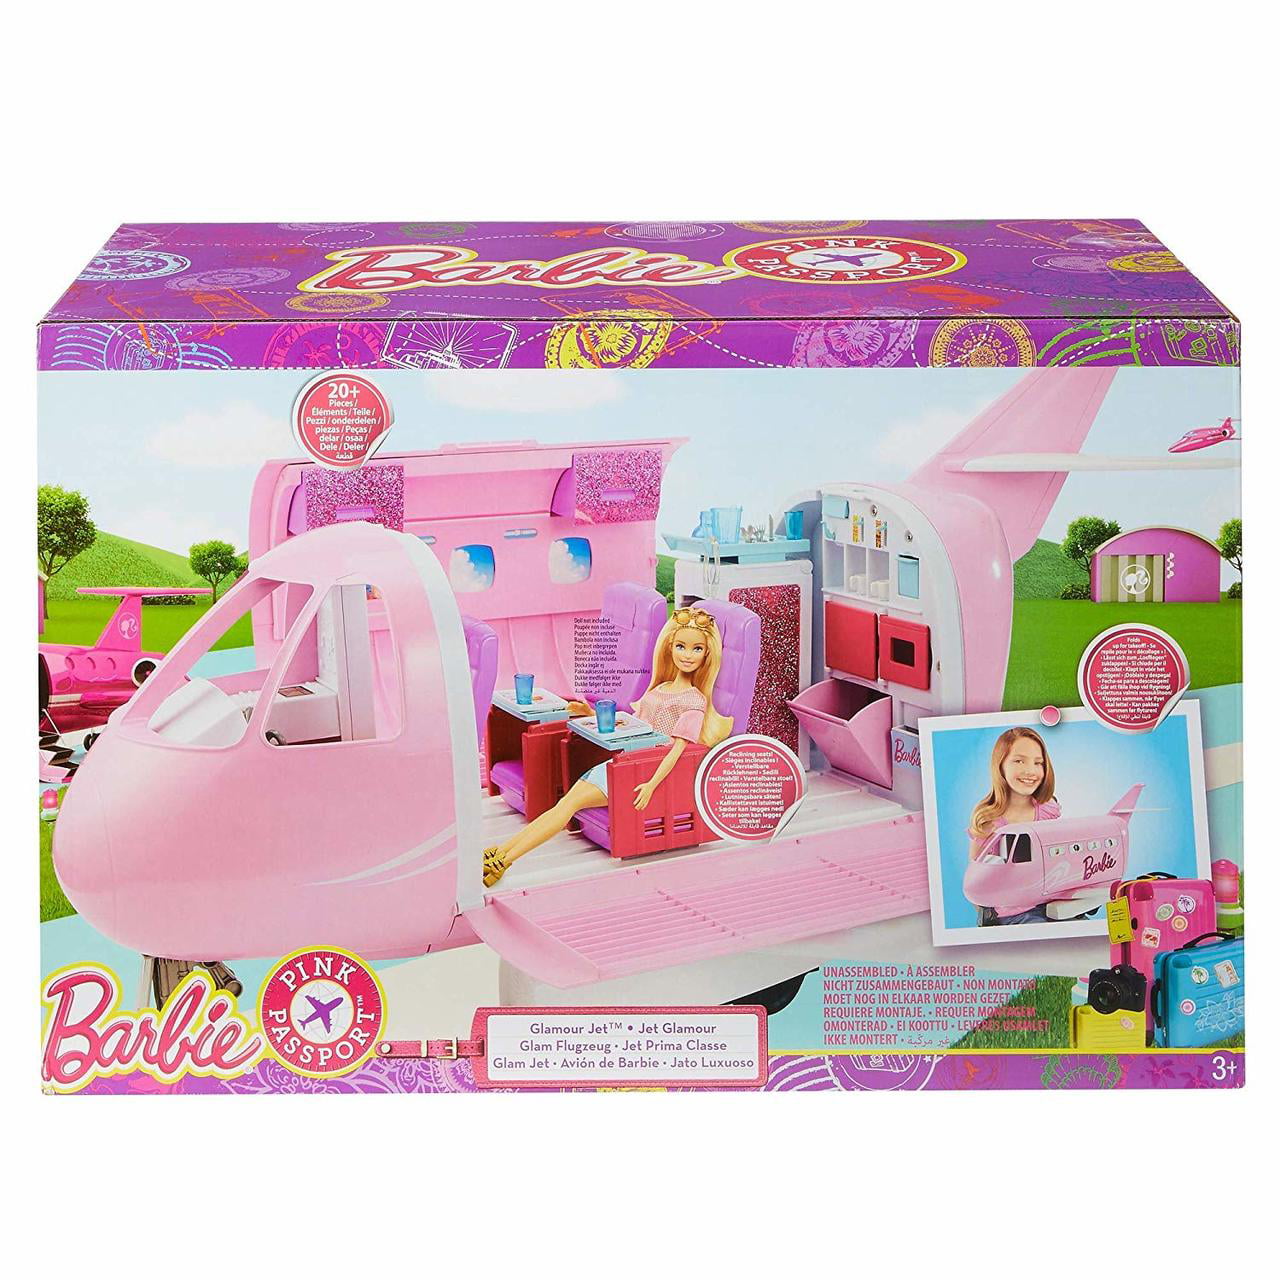 Barbie Glamour Vacation Jet - Walmart 